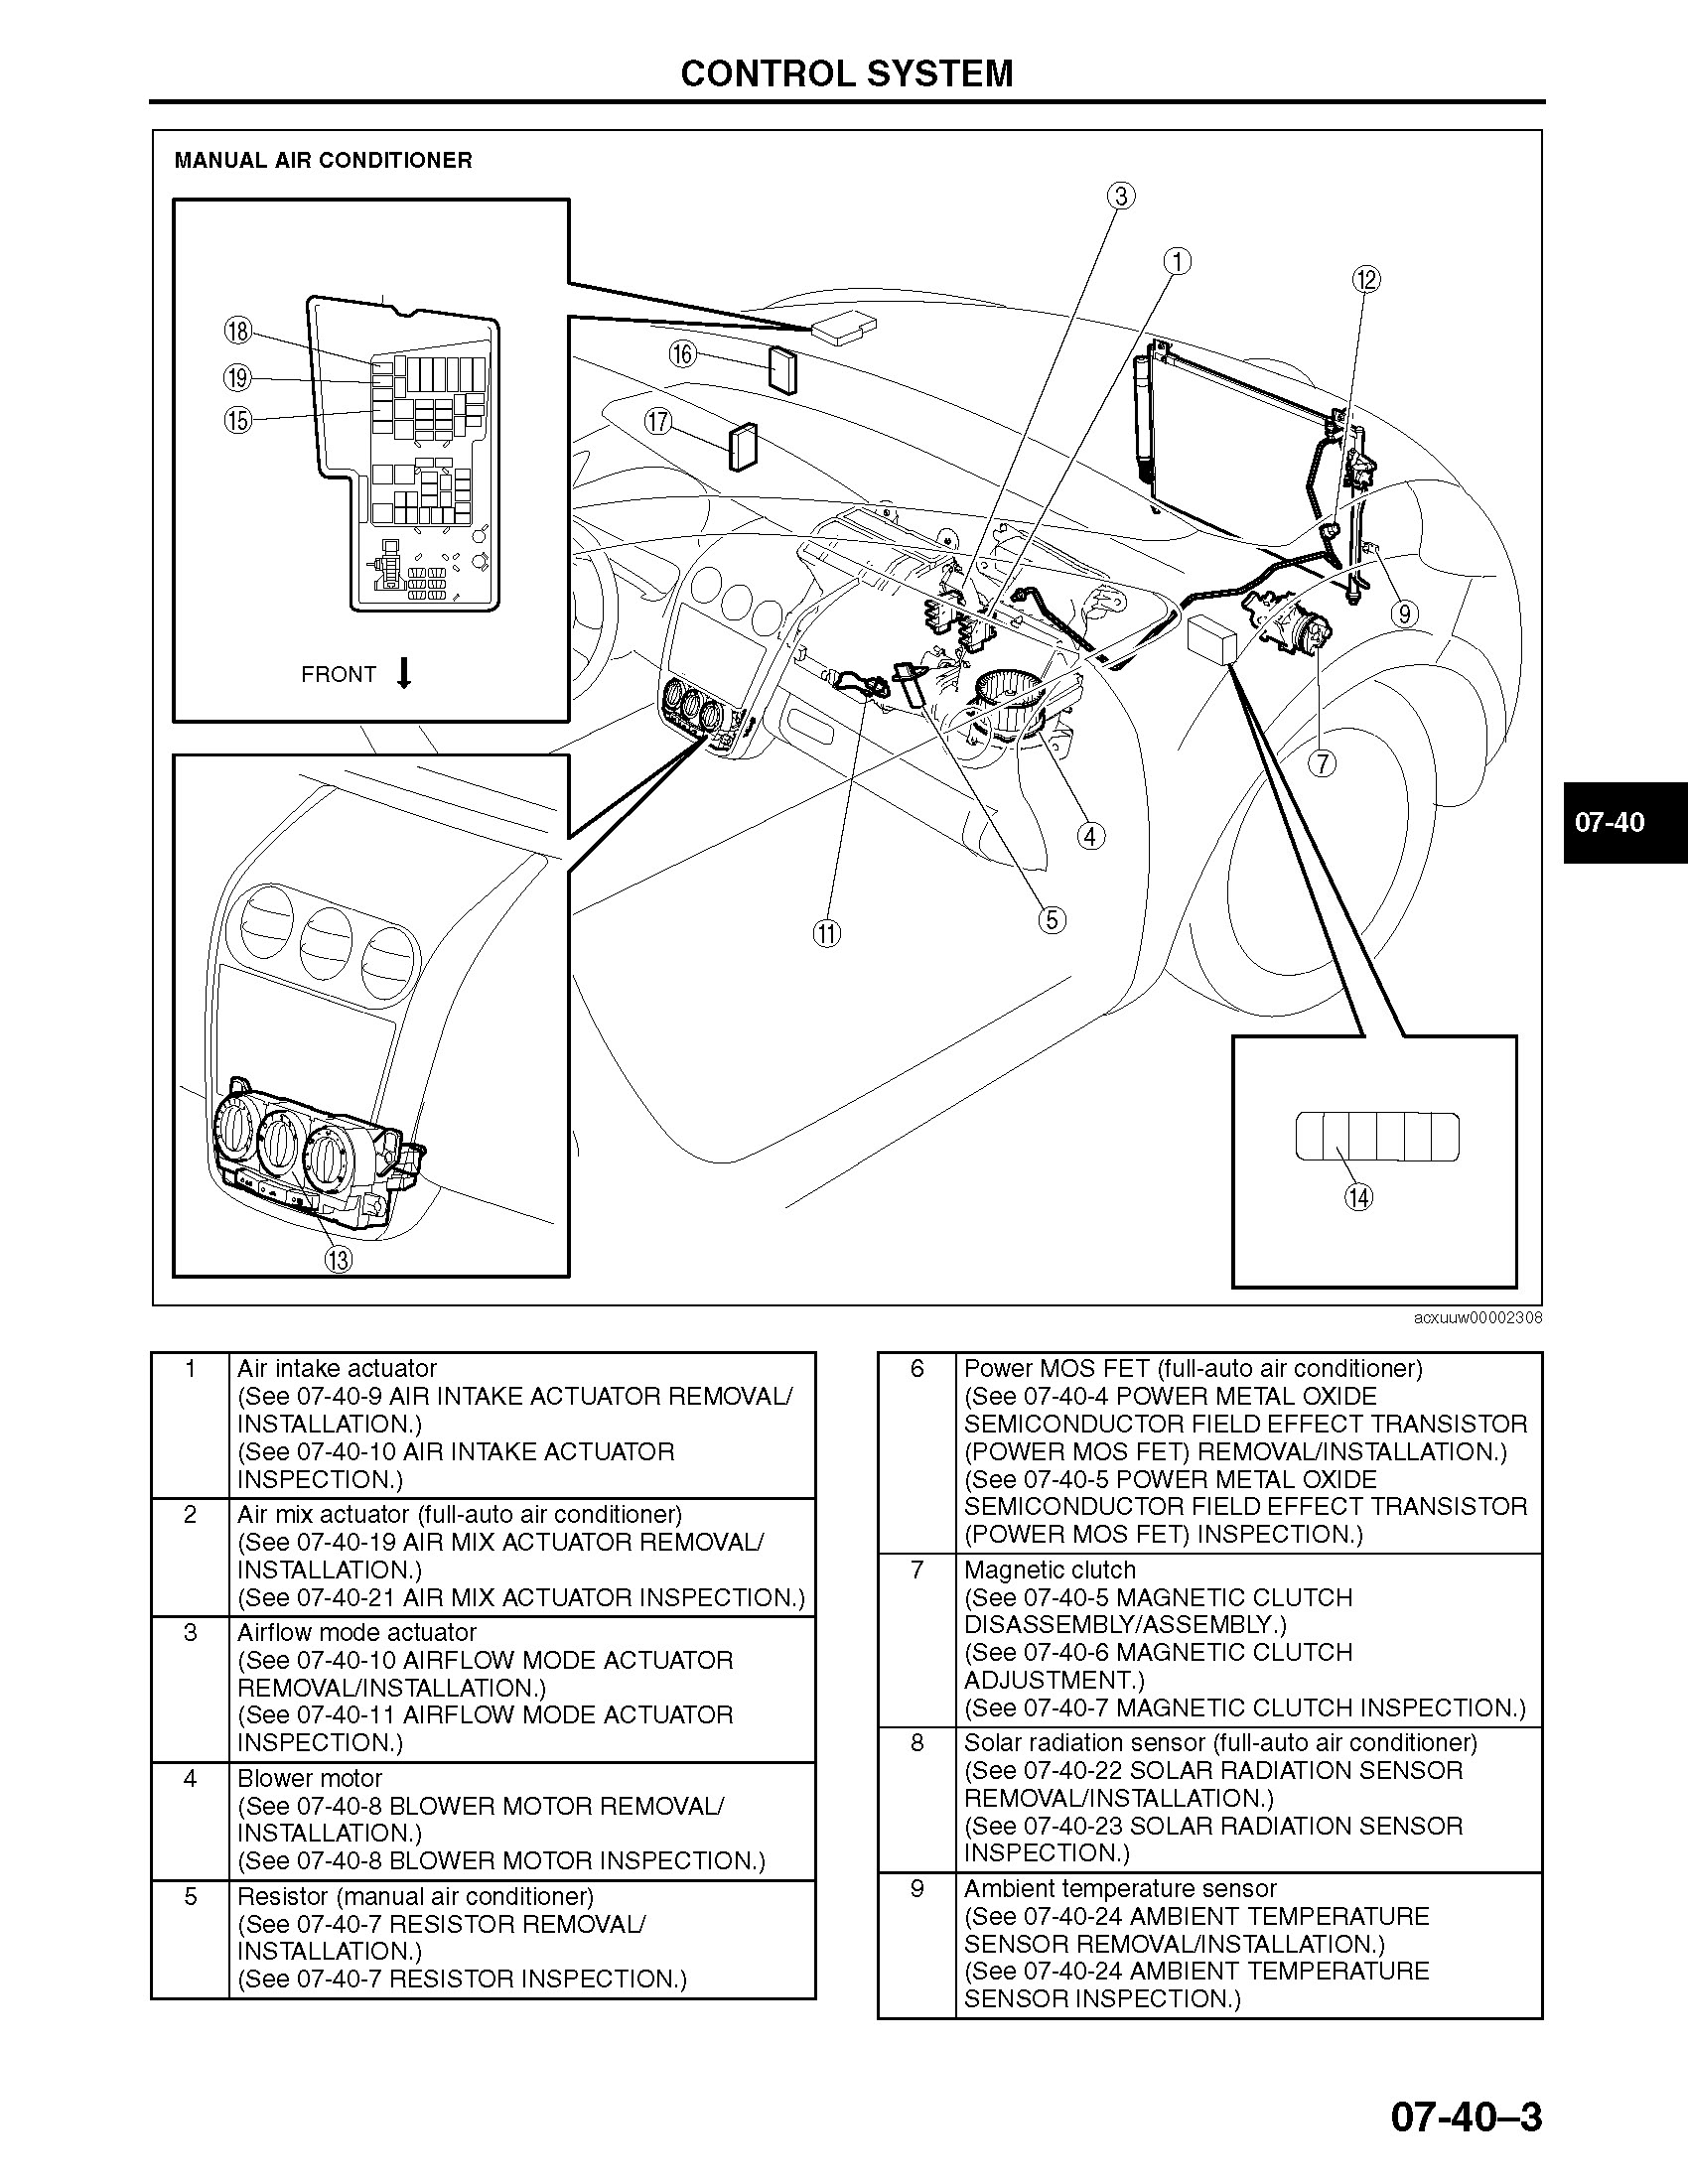 CONTENTS: 2007 Mazda CX-7 Repair Manual, Control System